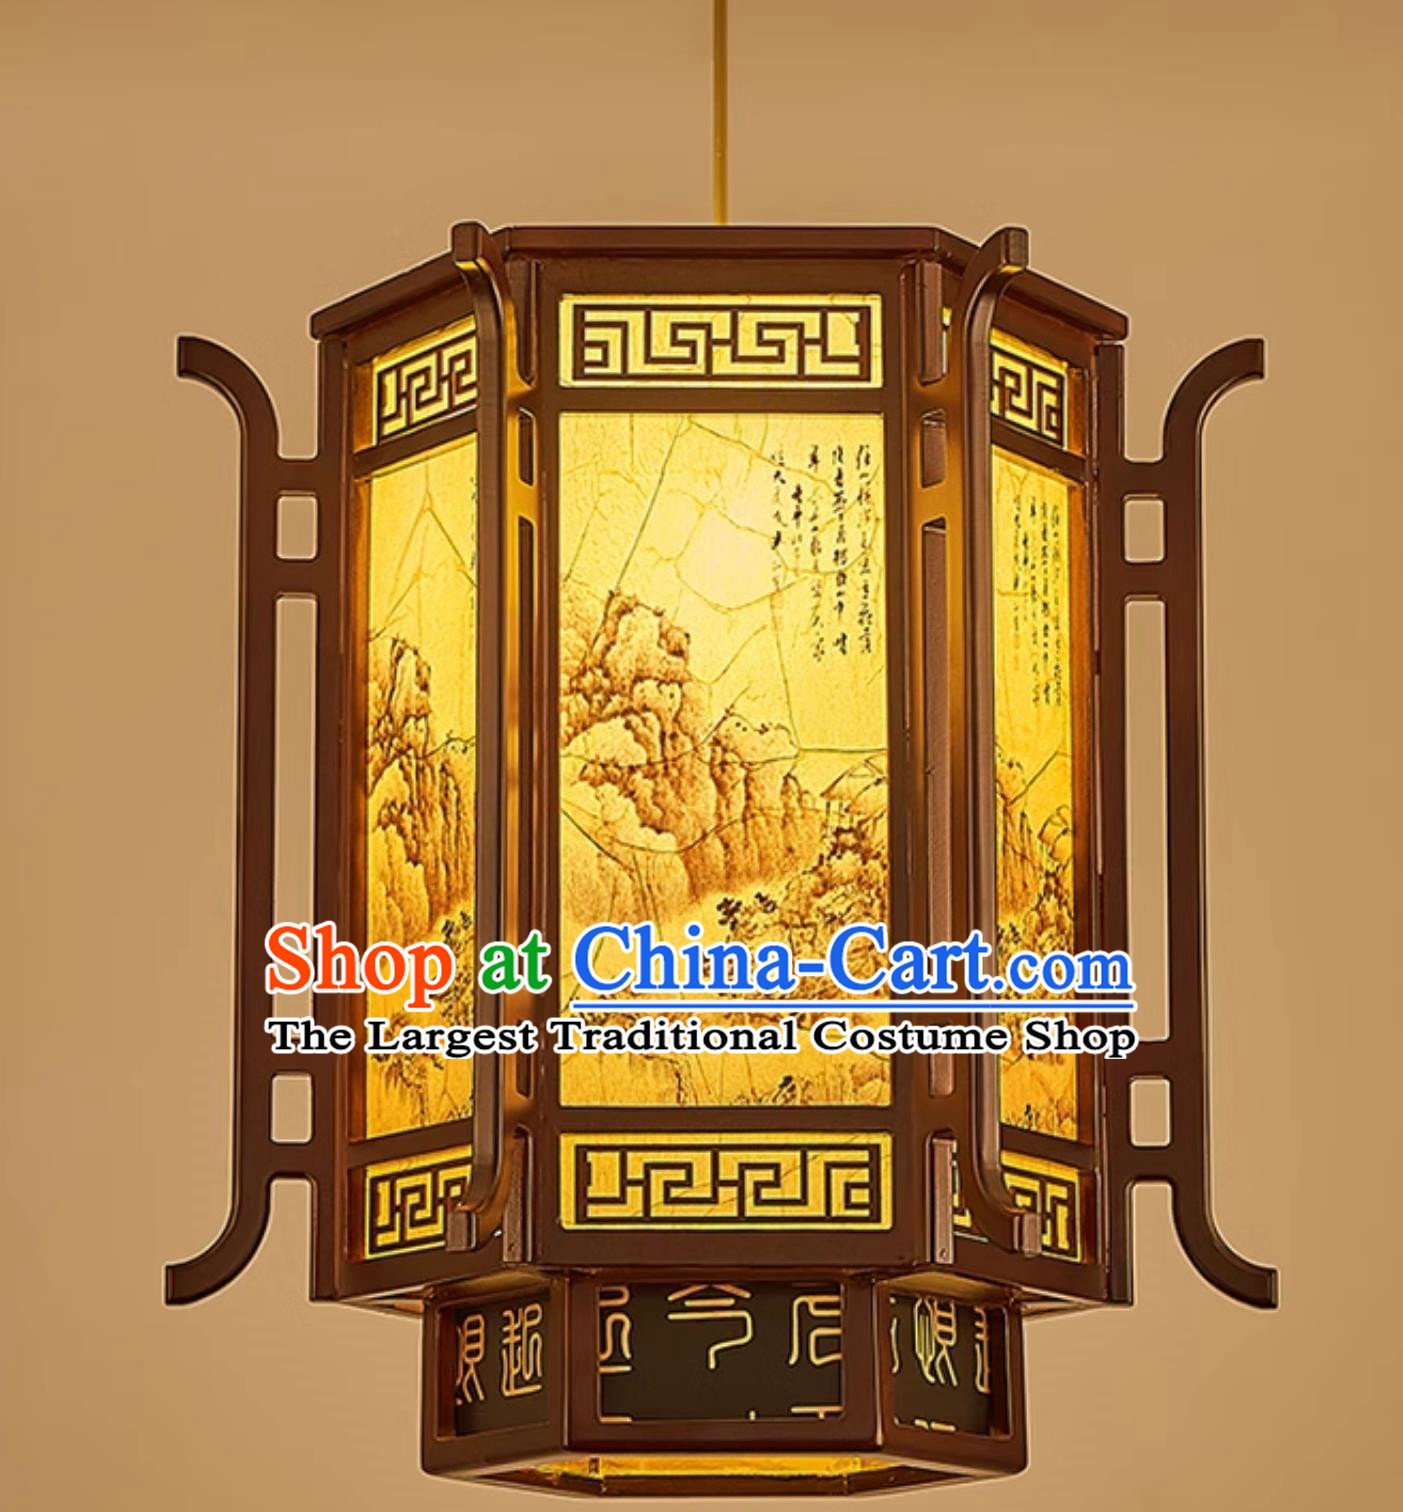 18 Inches High Chinese Lantern Chandelier Antique Tea Room Decoration Wooden Chandelier